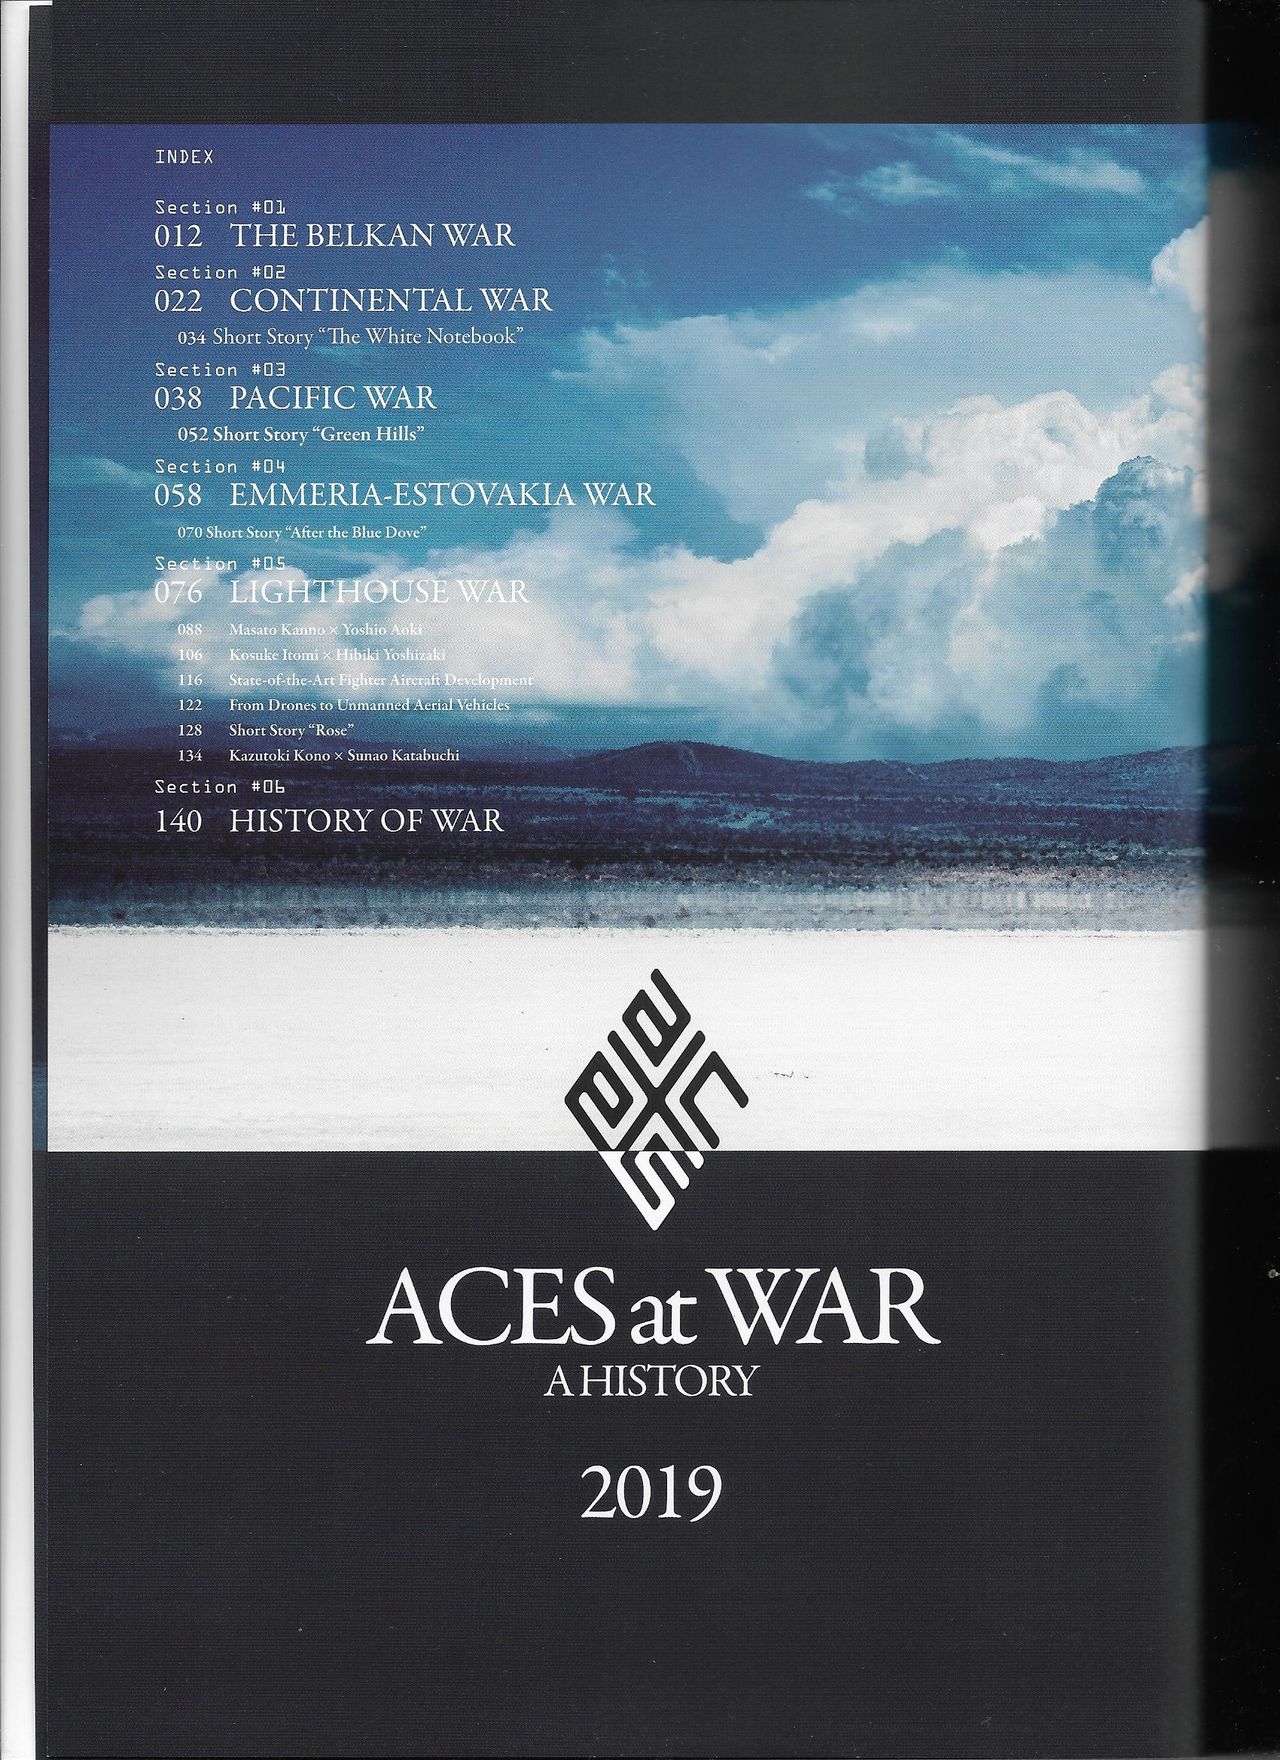 [Koda Kazuma] Aces at War - A History 2019 [English] 4